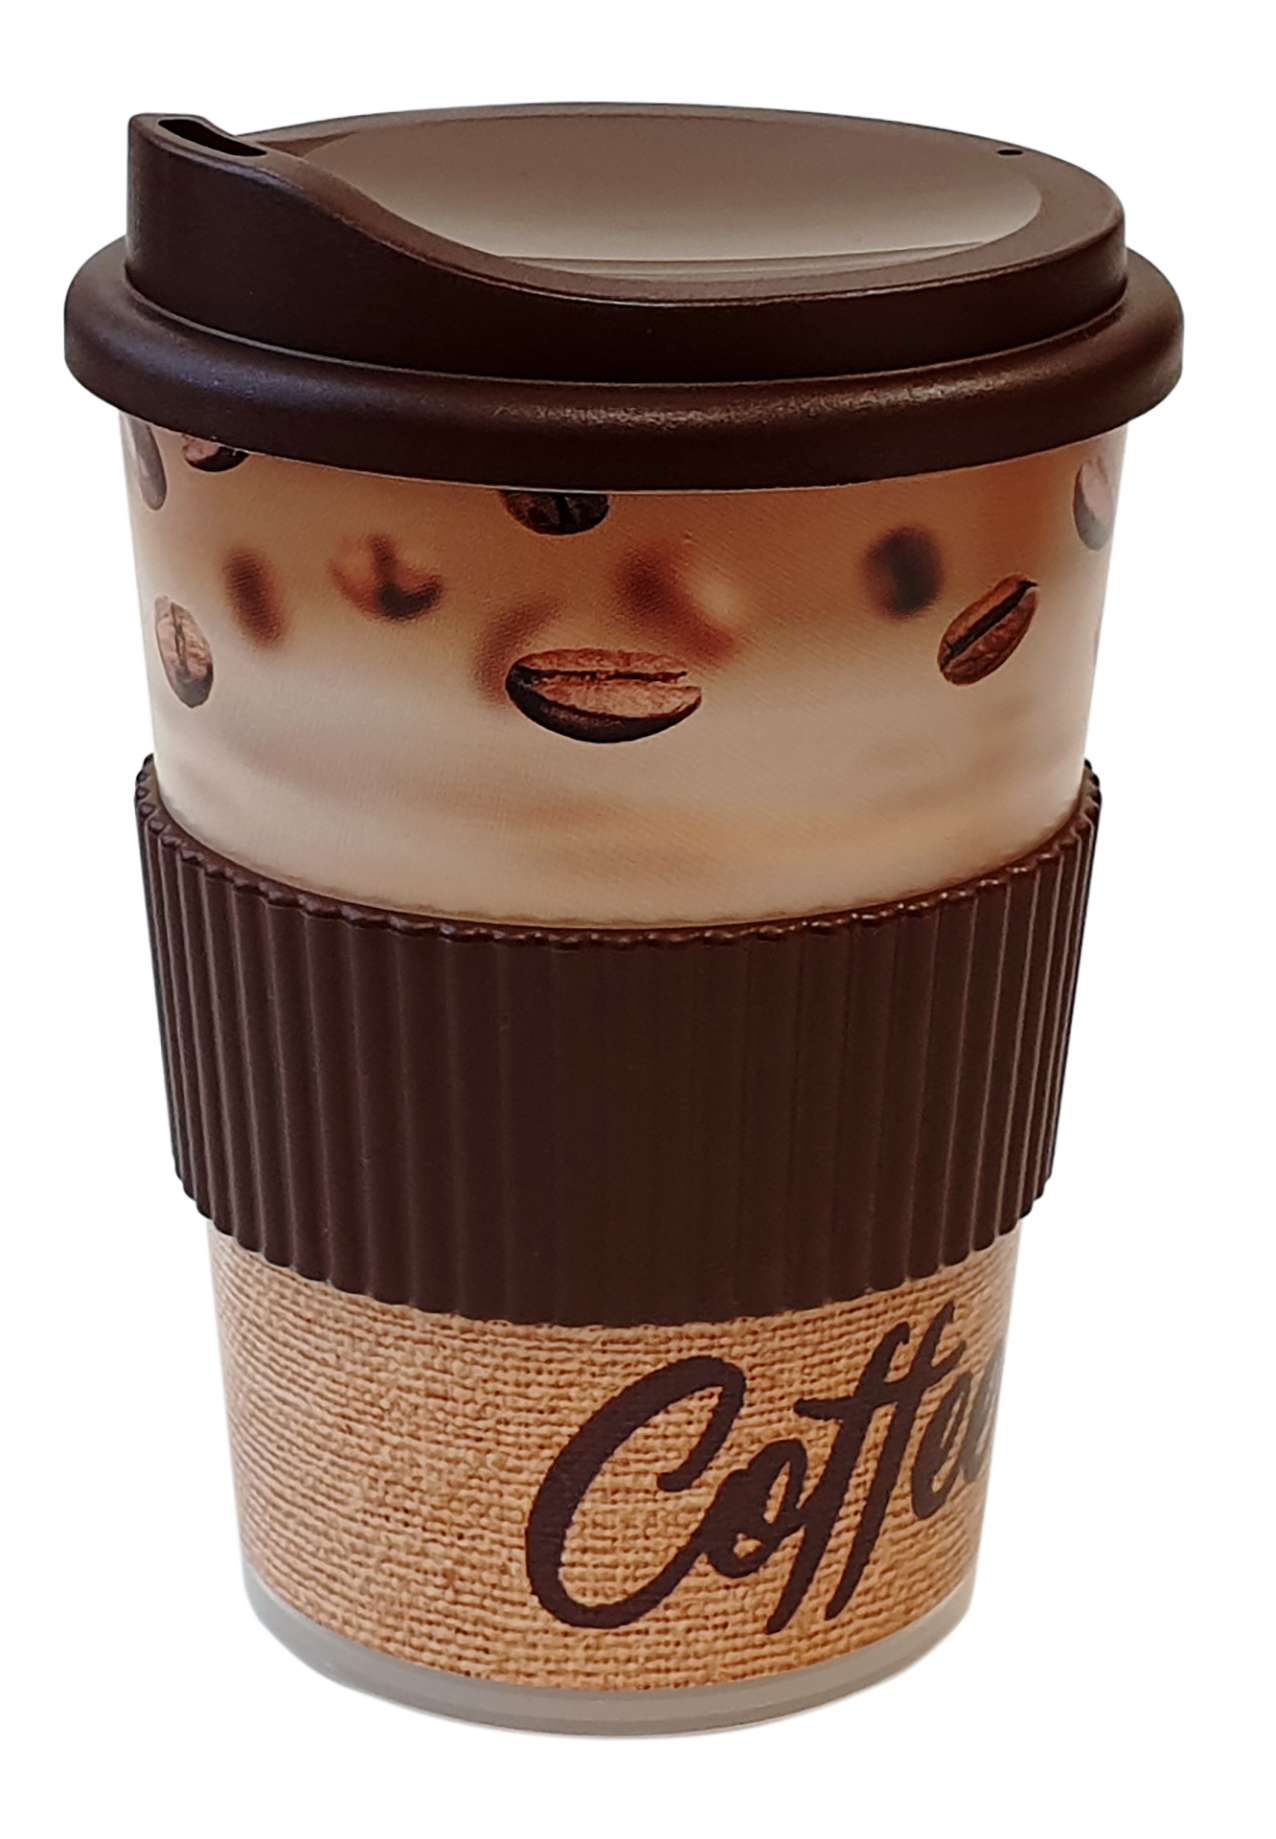 TVAR.cz - Produkt Cup 4dl Coffee + cuff